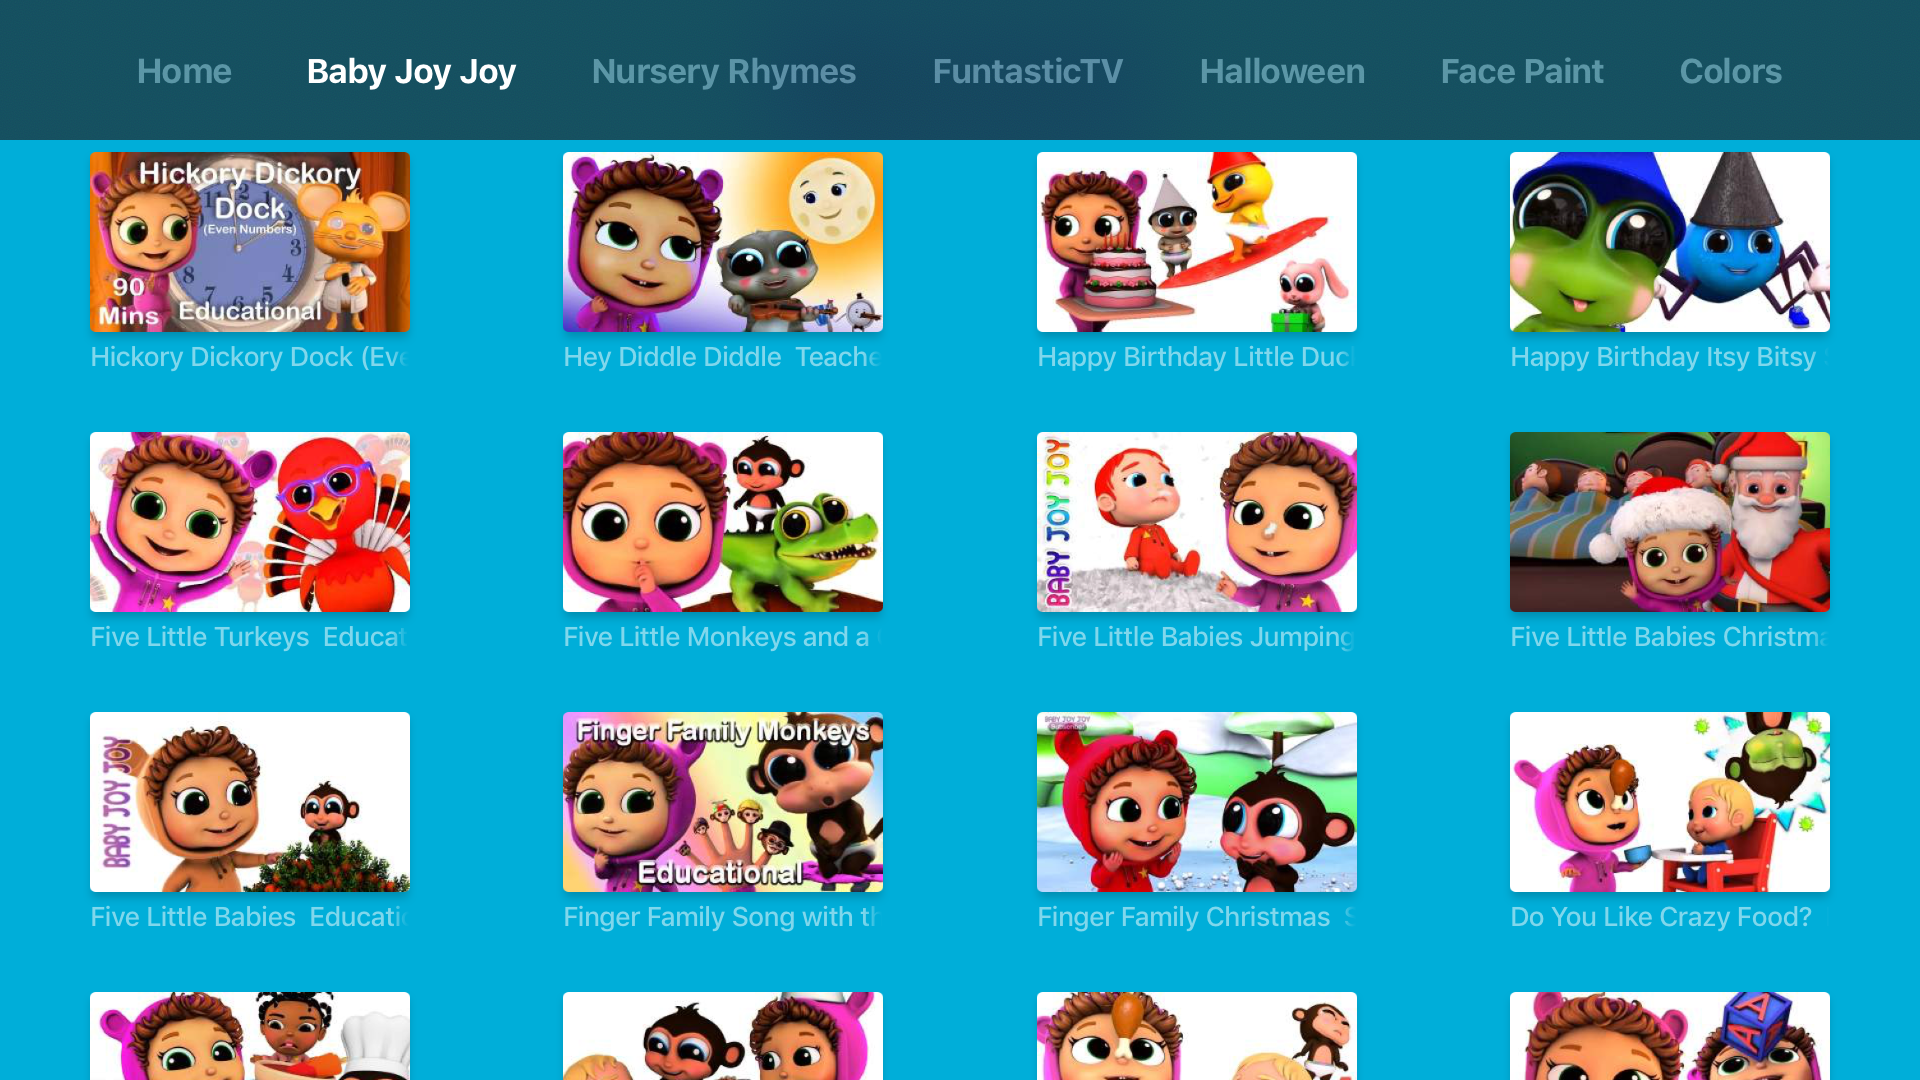 About: Joy Joy World (iOS App Store version)